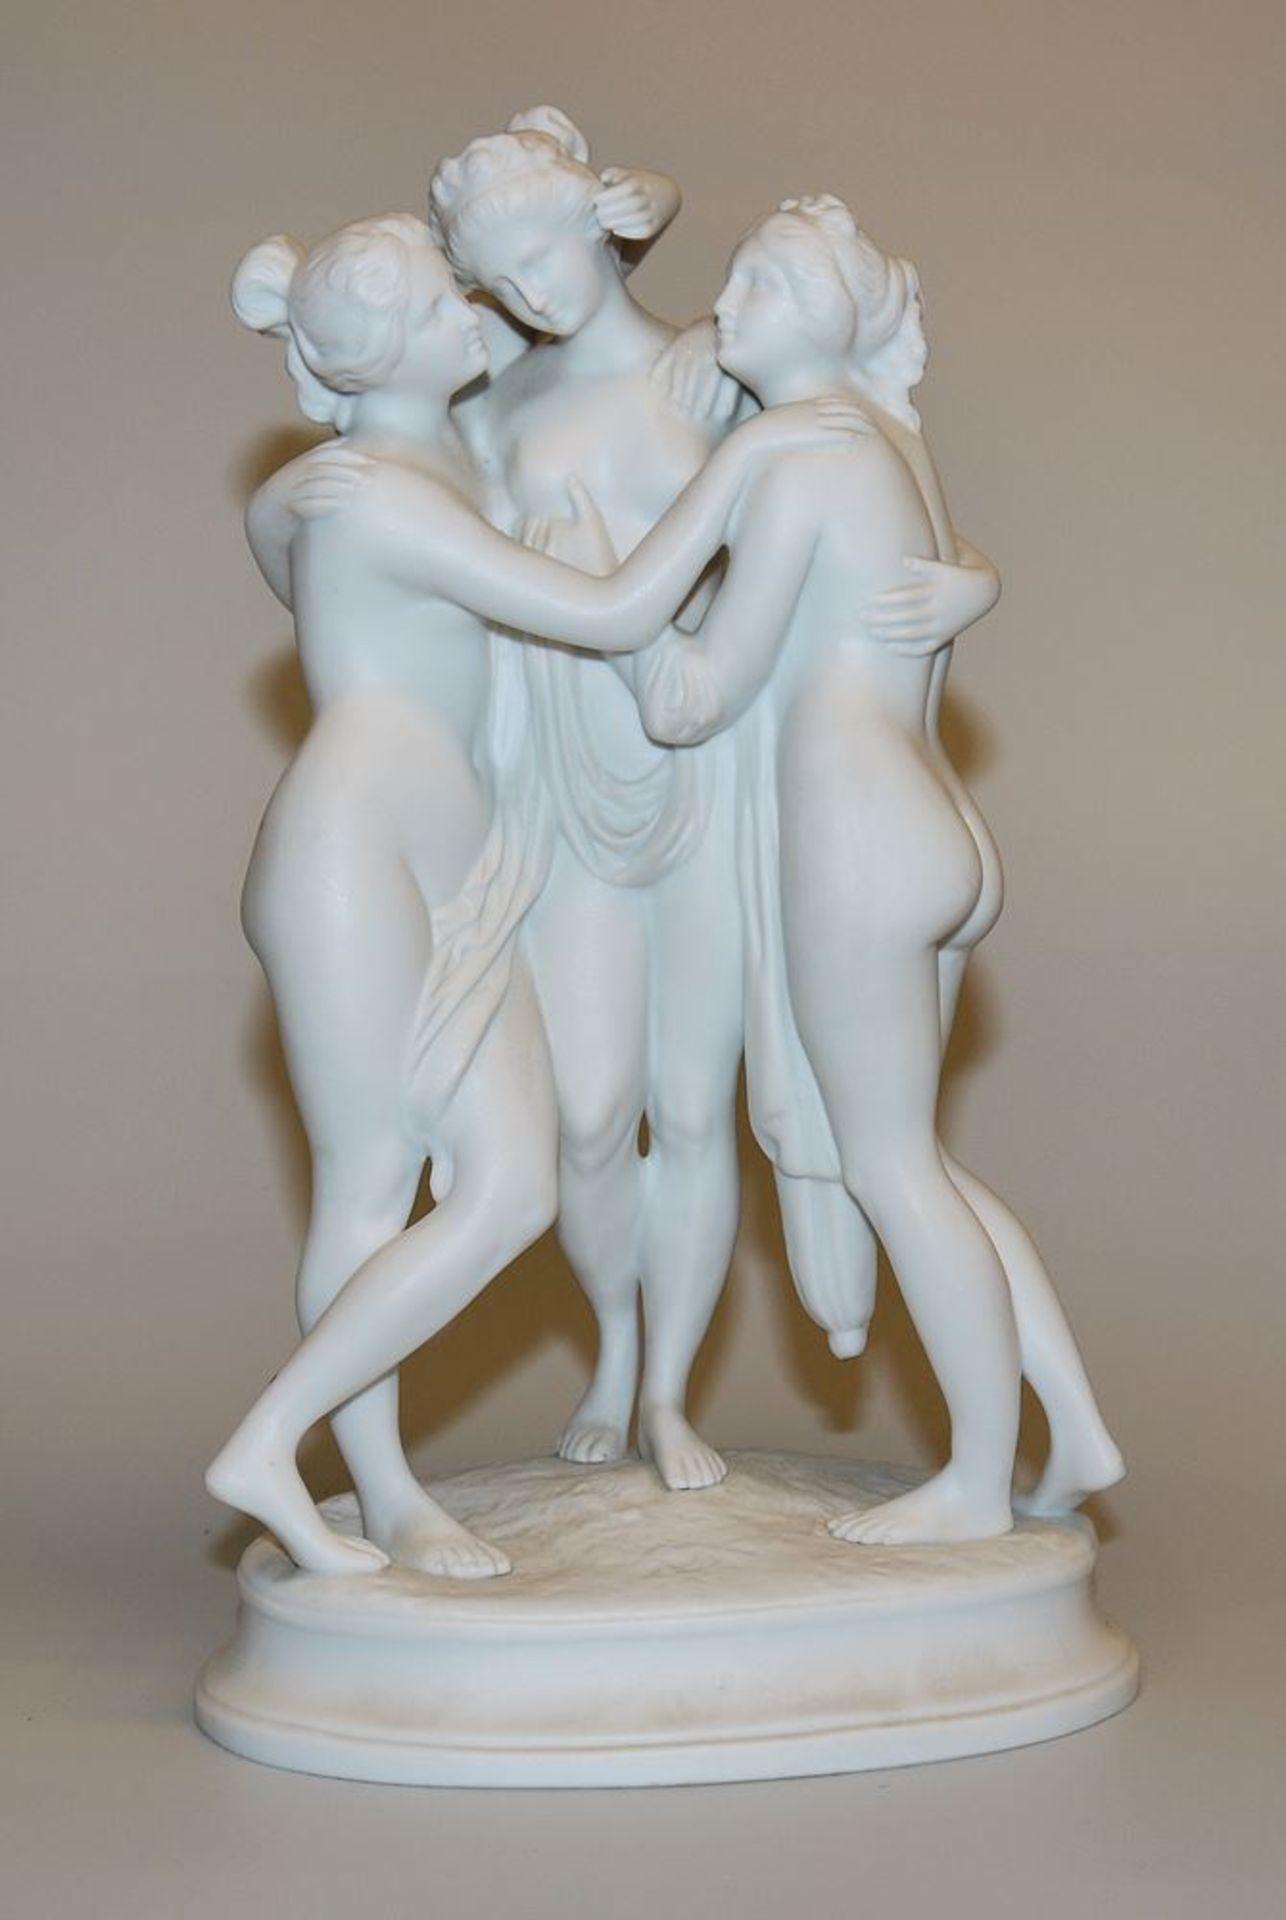 Porcelain group "Three Graces" after Antonio Canova, Hutschenreuther, Probstzella, c. 1880/1900